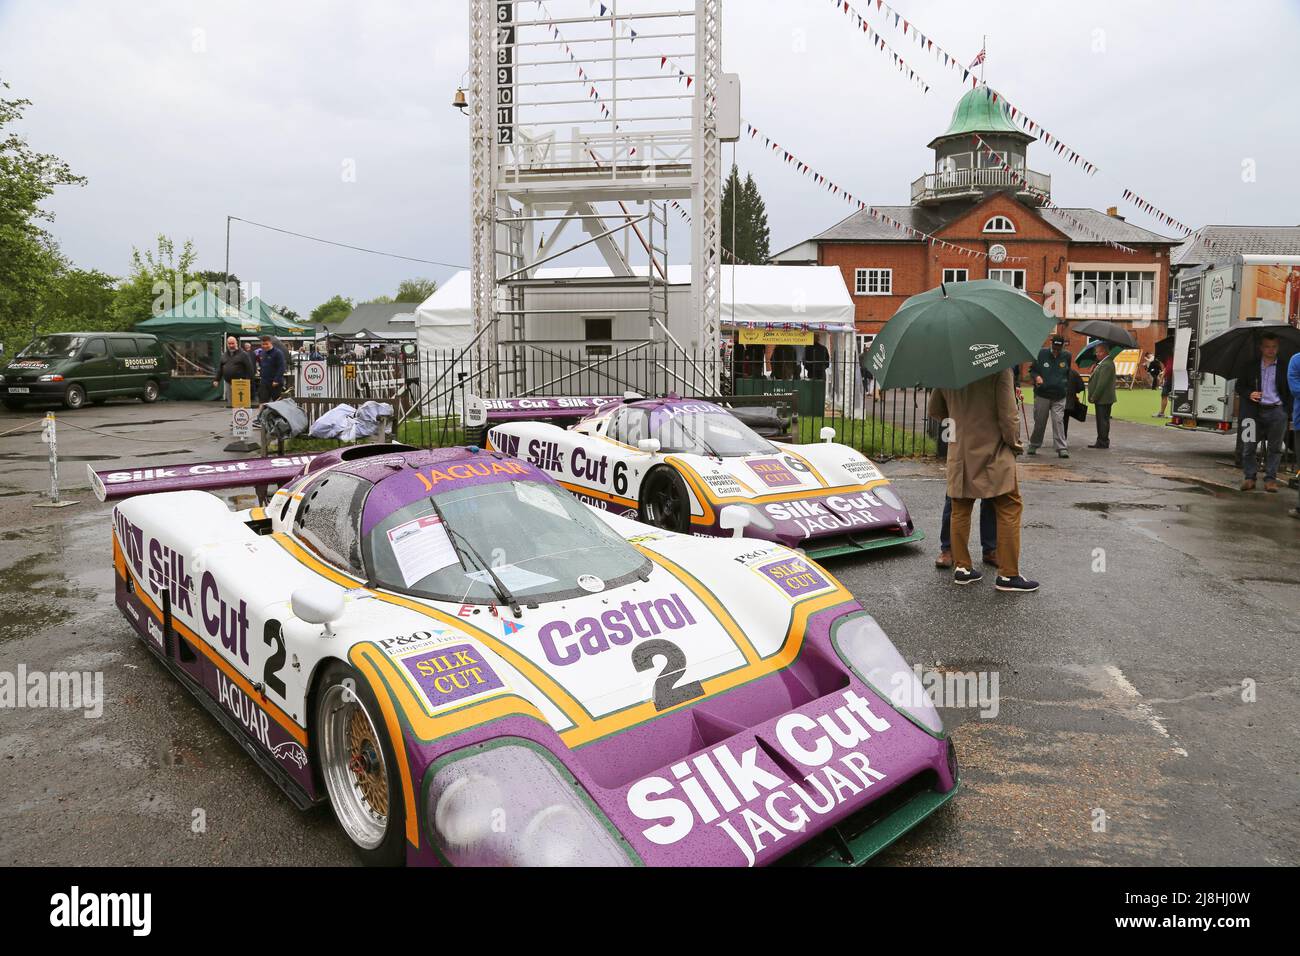 Jaguar XJR-9 (Gewinner von Le Mans 24hr 1988), Jaguar Centenary Day, 15. Mai 2022, Brooklands Museum, Weybridge, Surrey, England, Großbritannien, Großbritannien, Europa Stockfoto